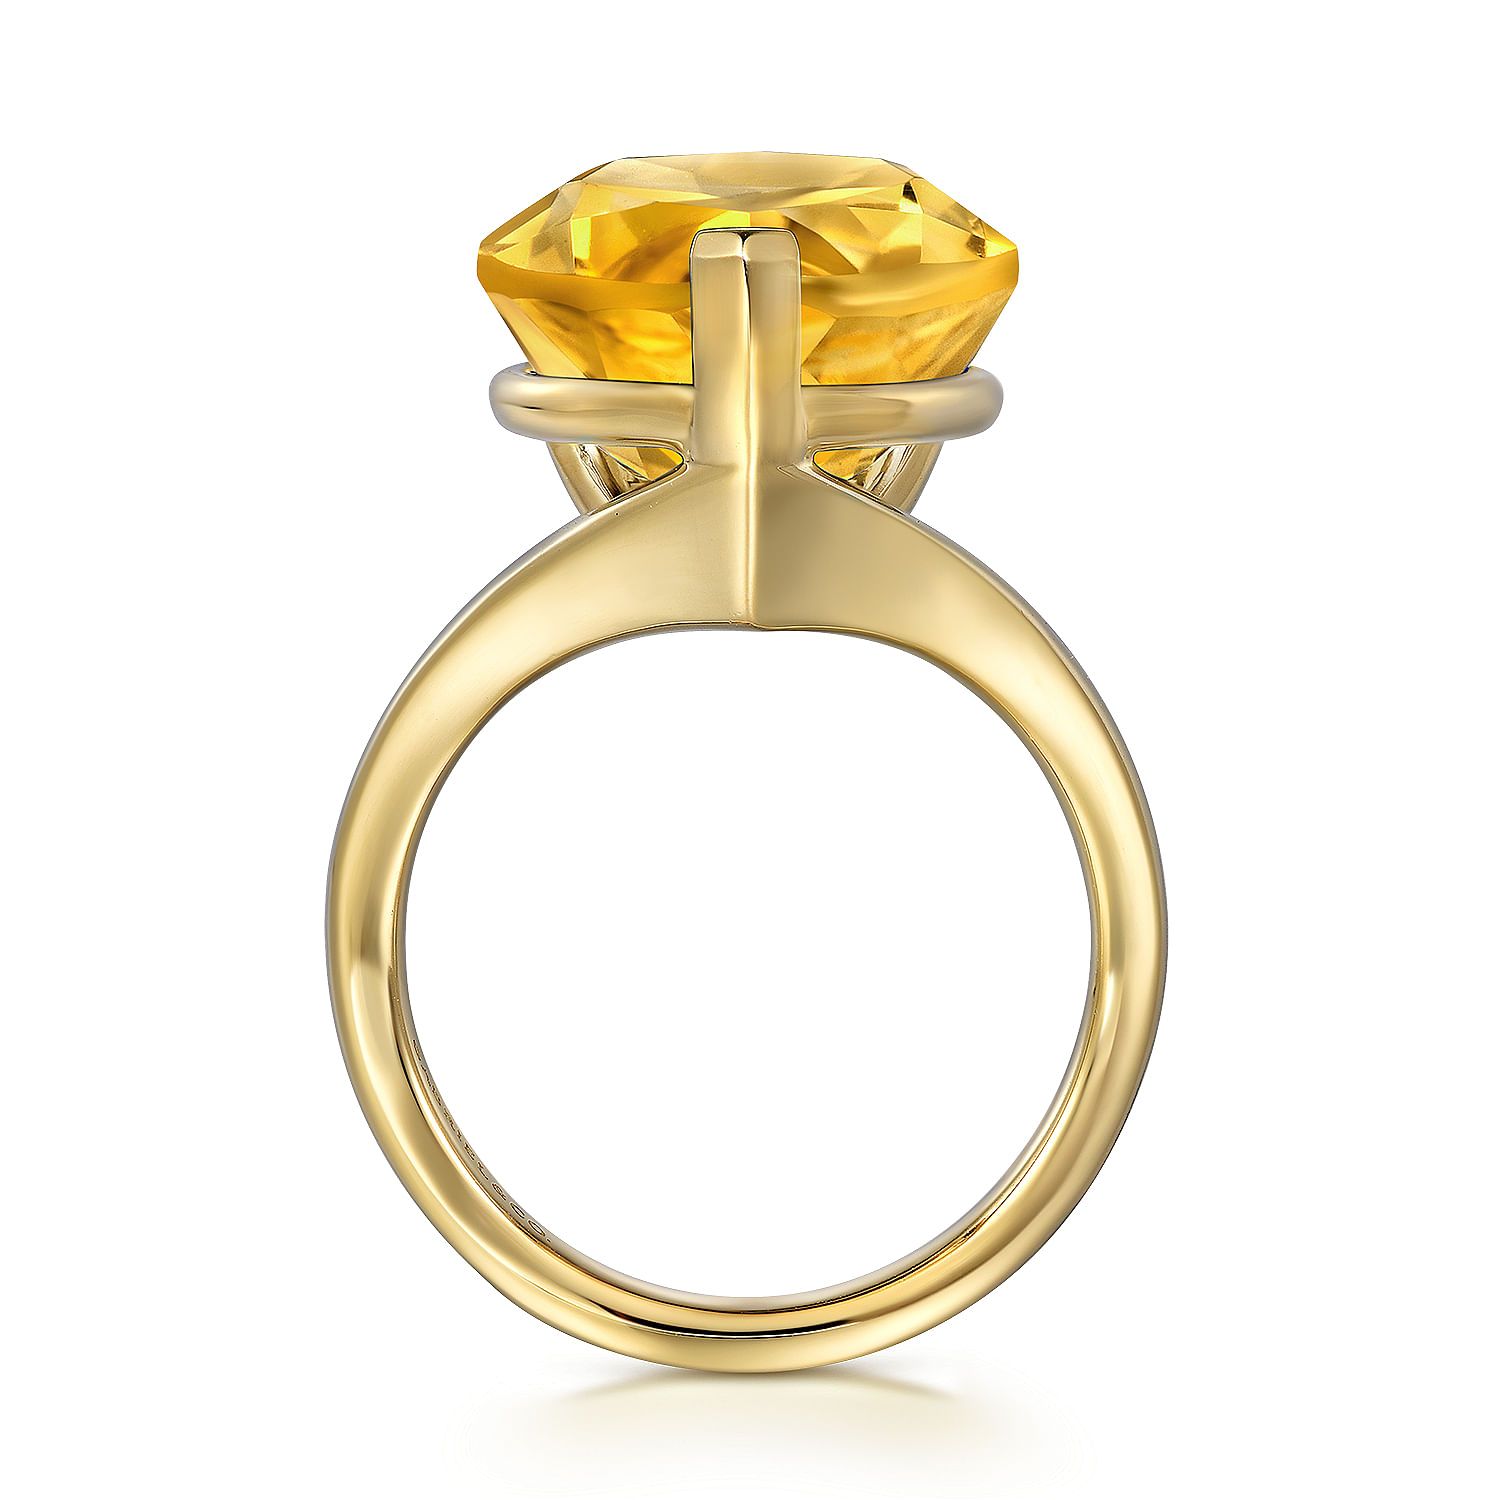 14K Yellow Gold Citrine Flat Pear Ladies Ring